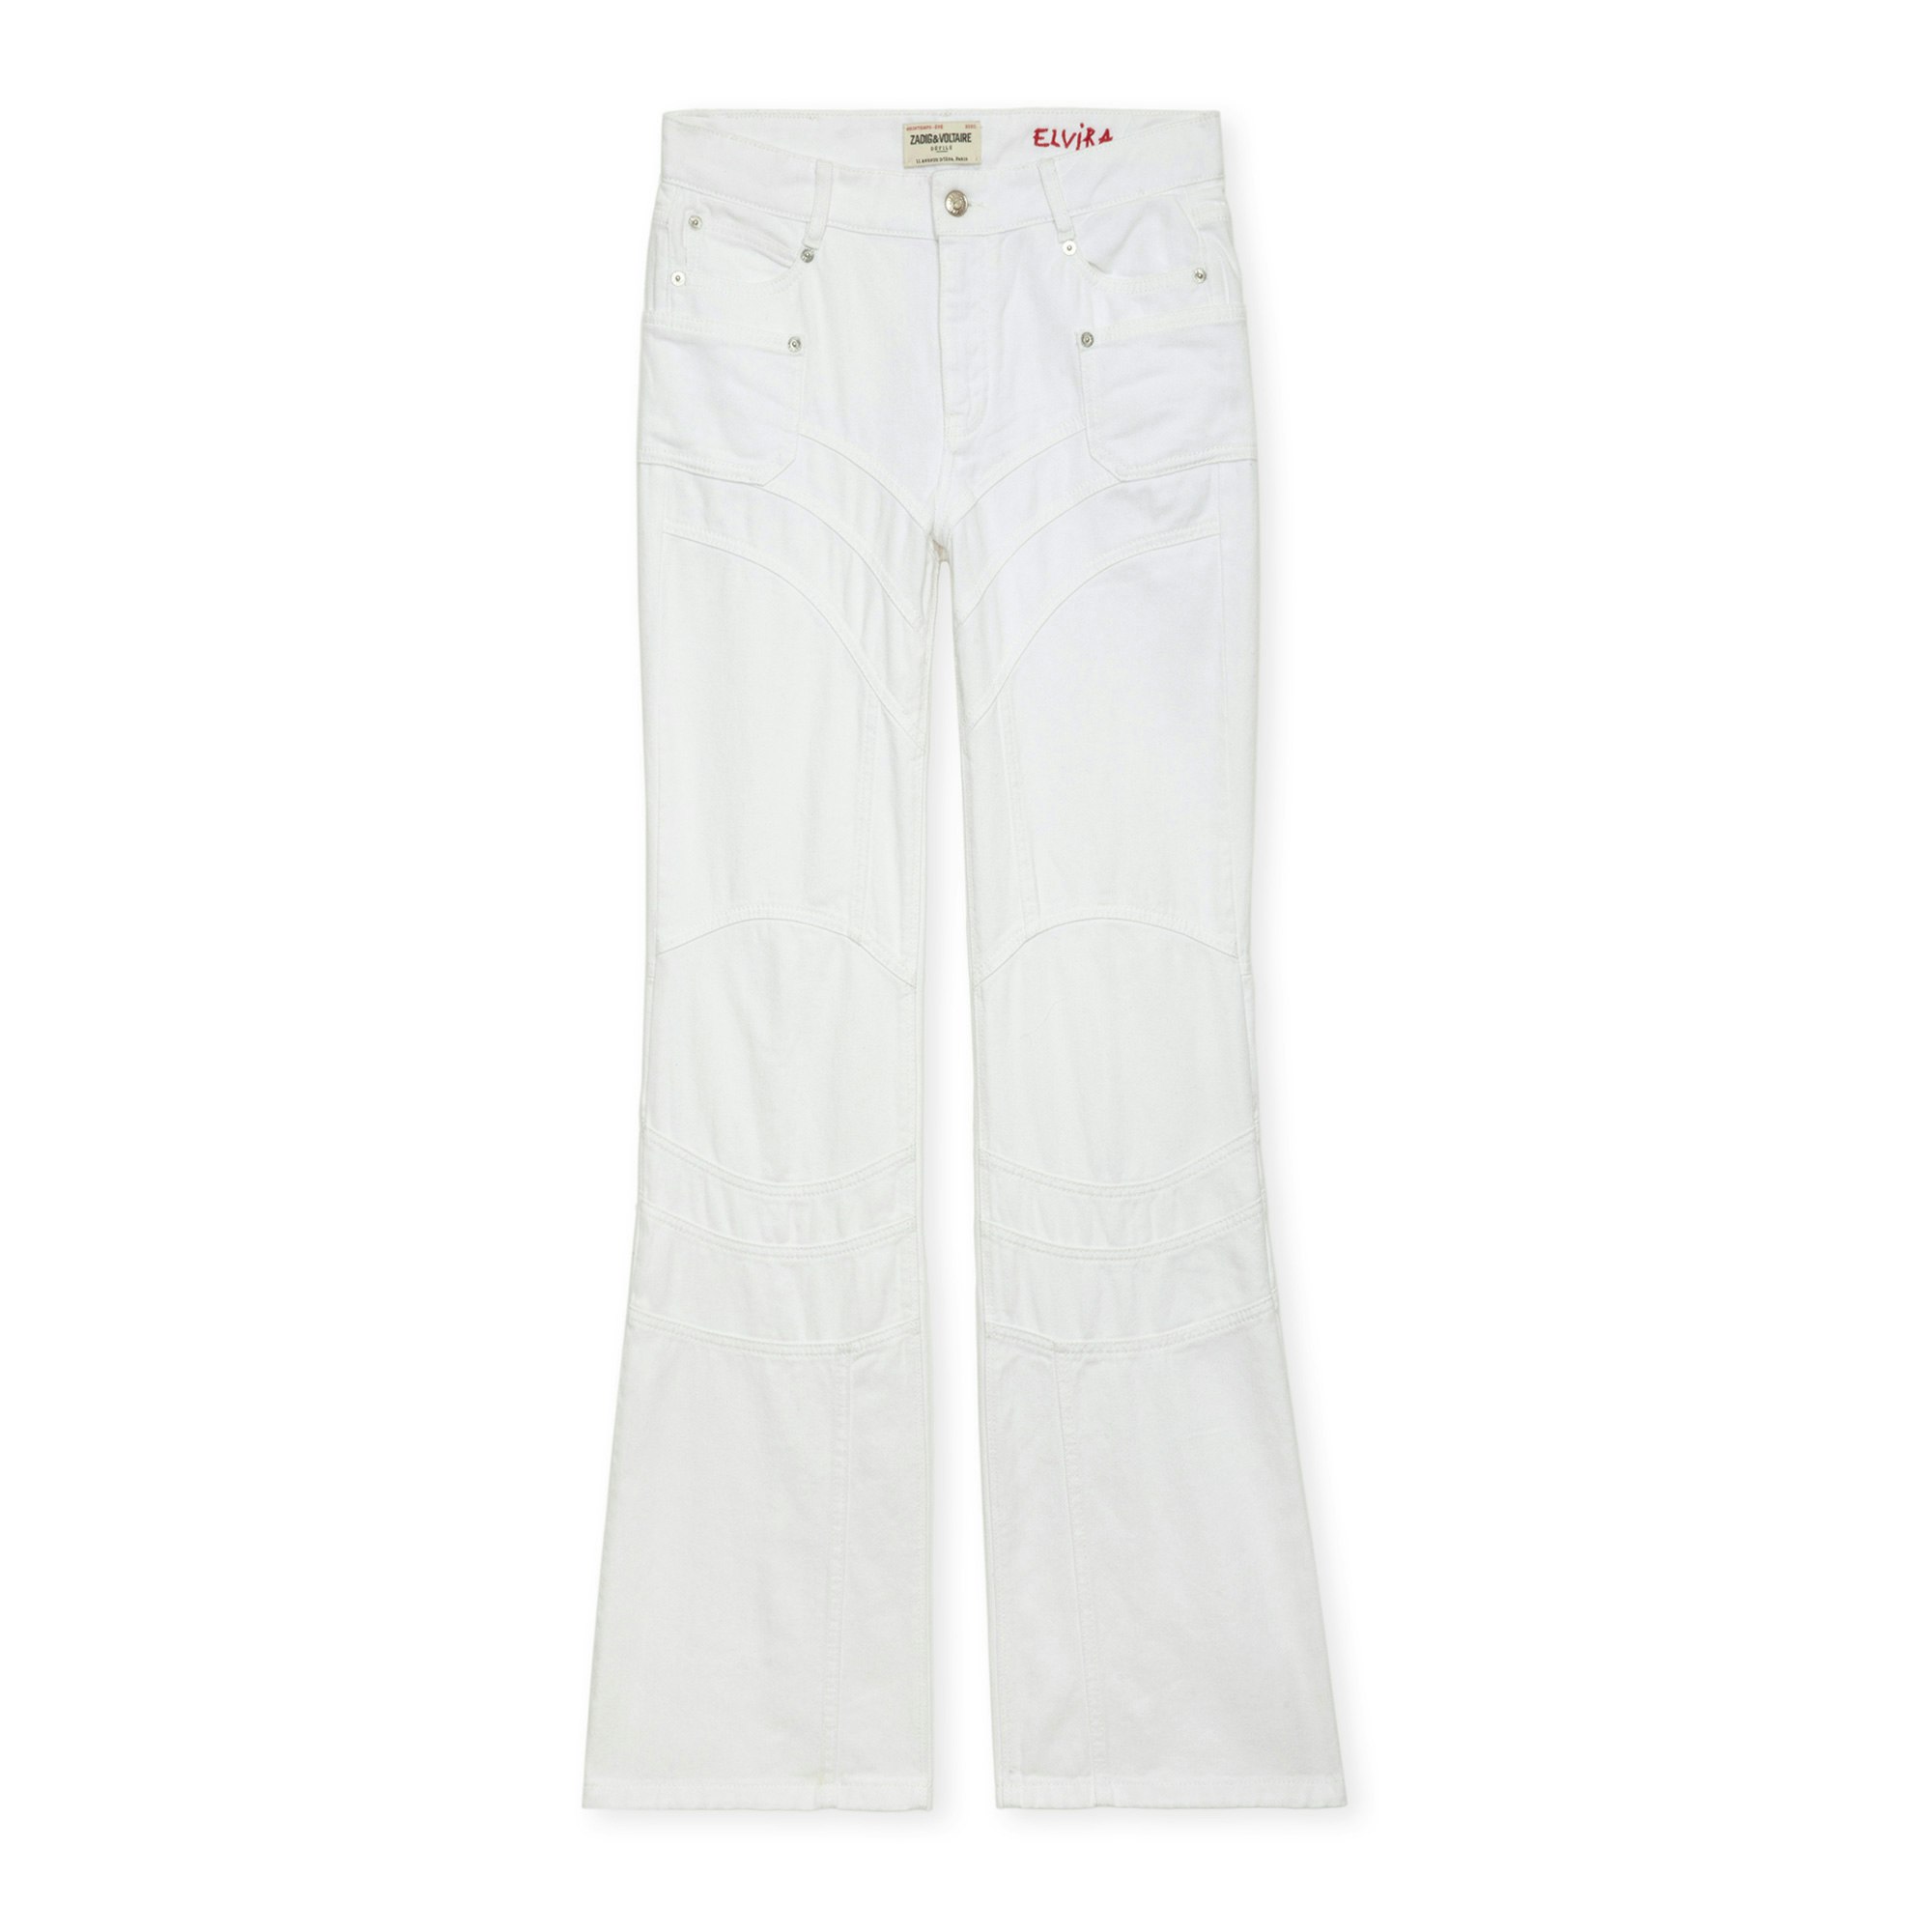 Zadig & Voltaire Elvira Jeans In White